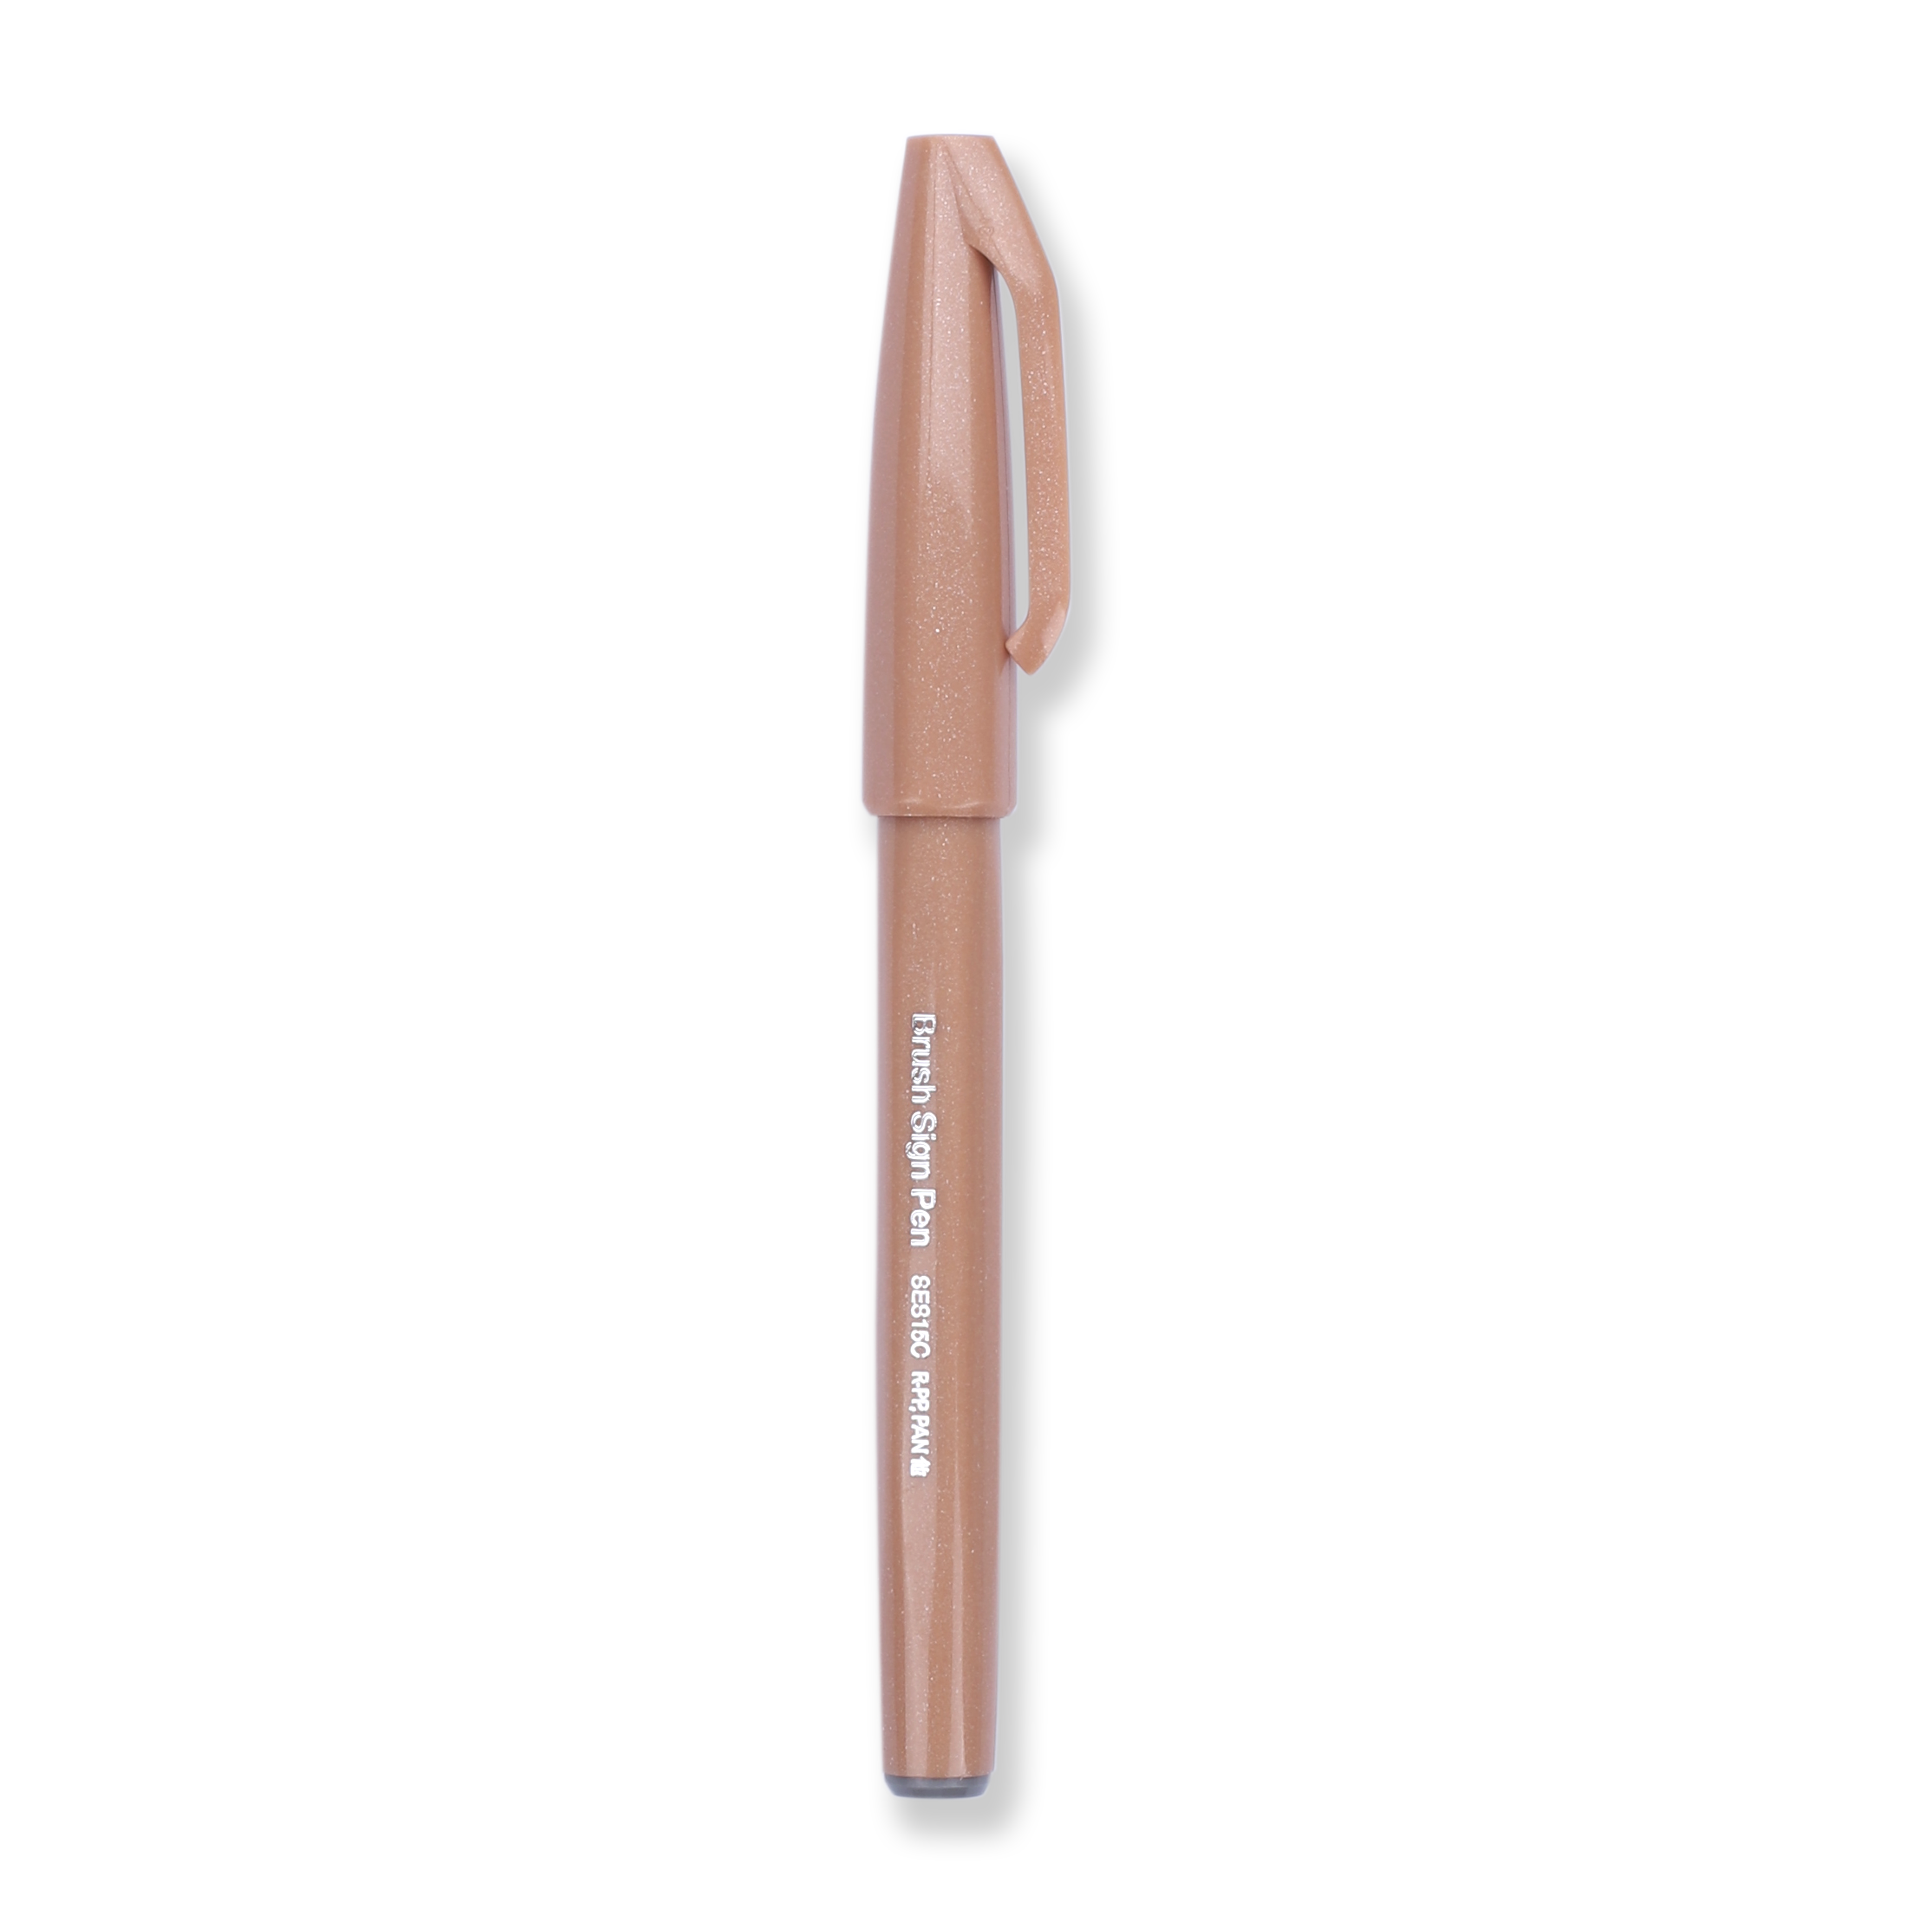 Pentel Fude Touch Brush Sign Pen - Pale Brown - 2020 New Colors